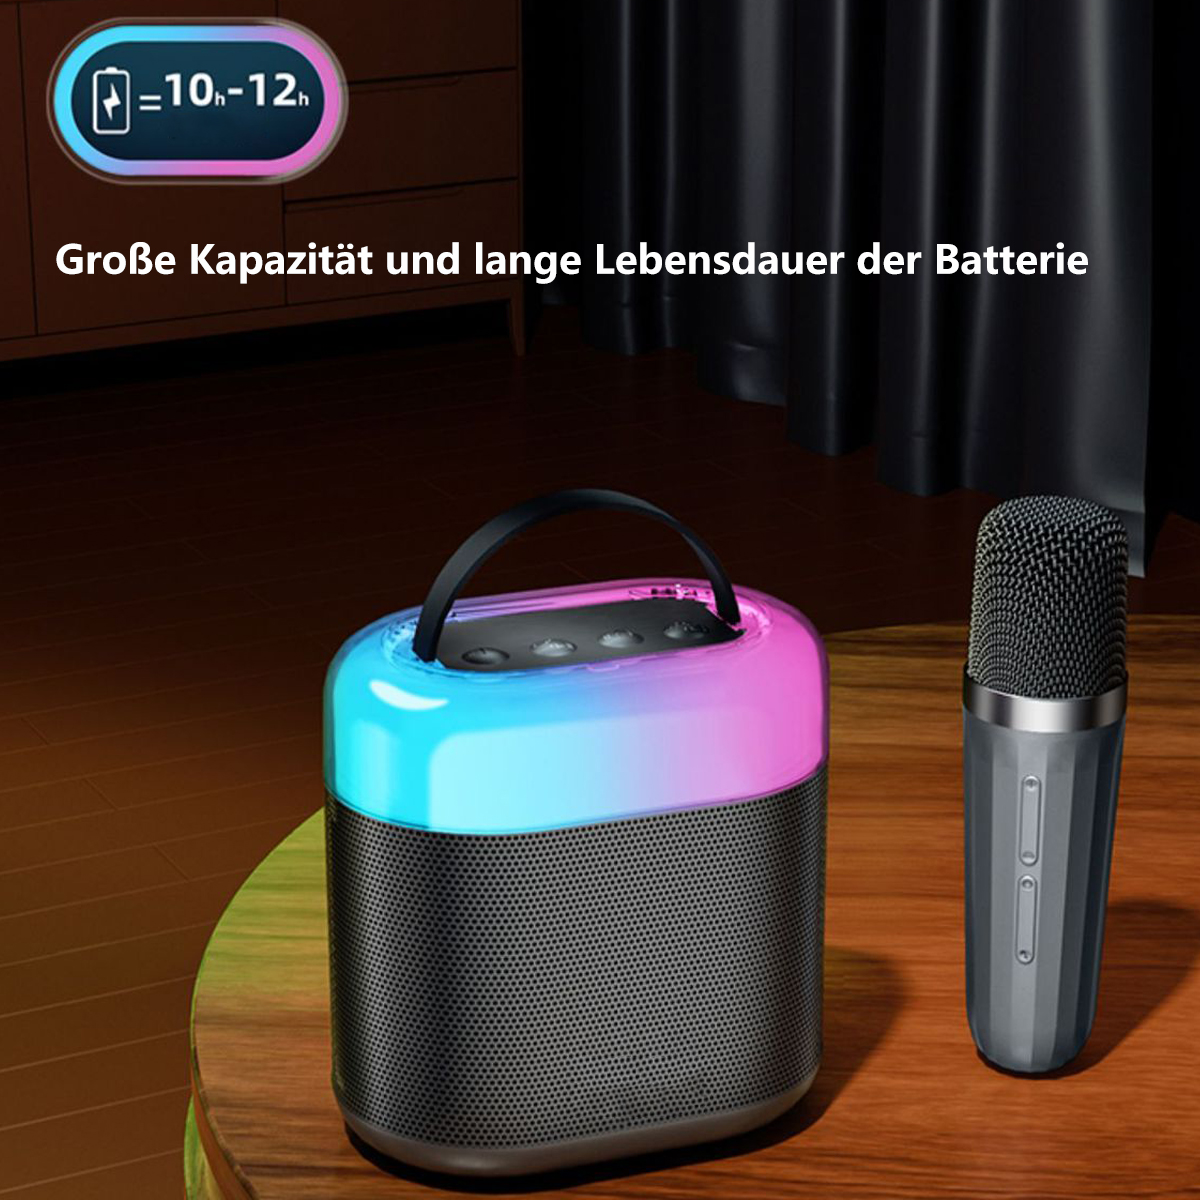 Song Sound SHAOKE Lautsprecher, klein für k drahtlose Heimgebrauch Grau Mikrofon ktv Mikrofon Bluetooth-Lautsprecher den